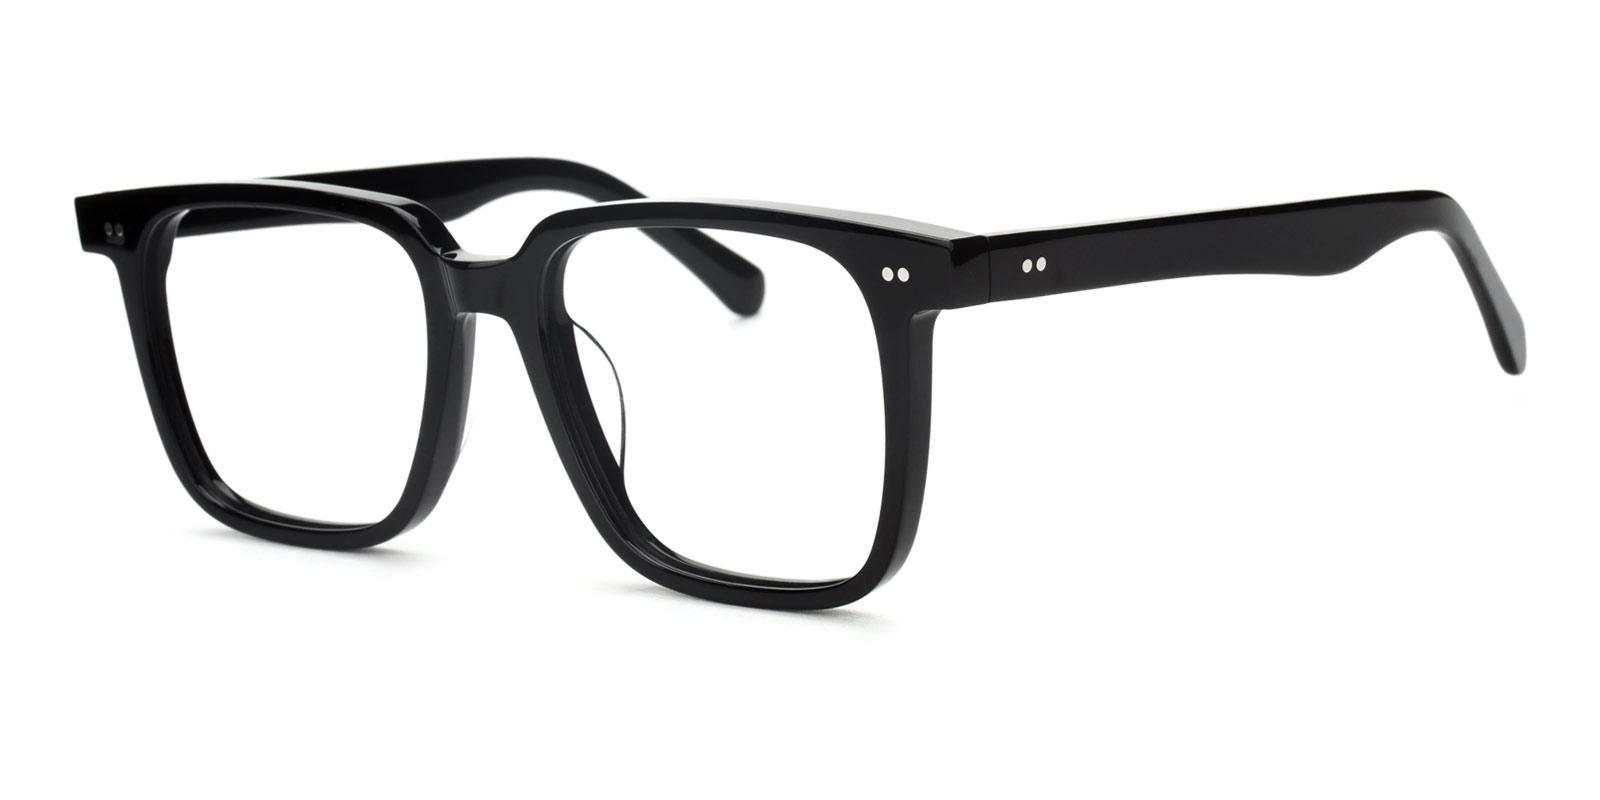 Mythaceous Black Acetate Eyeglasses , UniversalBridgeFit Frames from ABBE Glasses